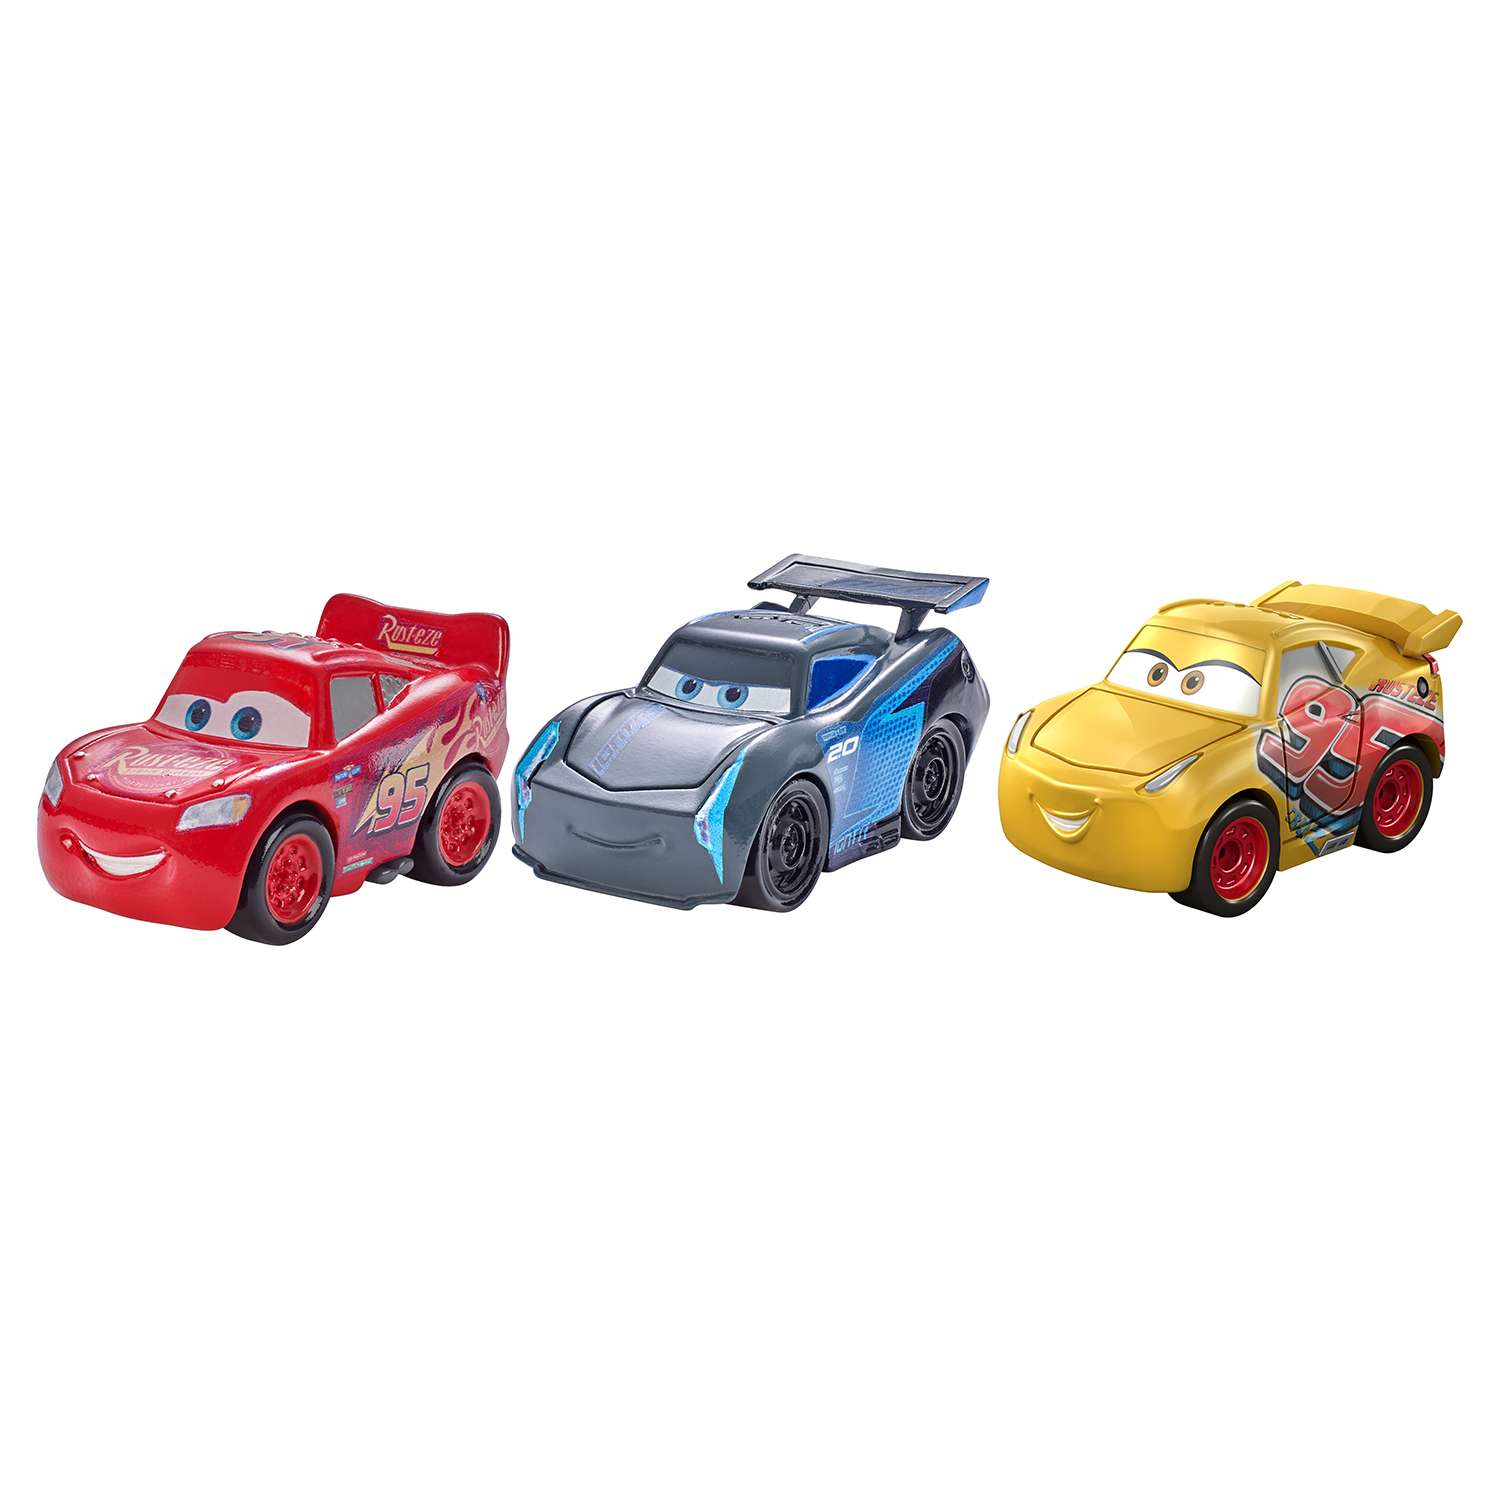 Car 3 бесплатные покупки. Mini Racers Тачки 3. Машинка cars Маттел. Мини Тачки 3 игрушки. Машинки Disney Pixar cars Mini.